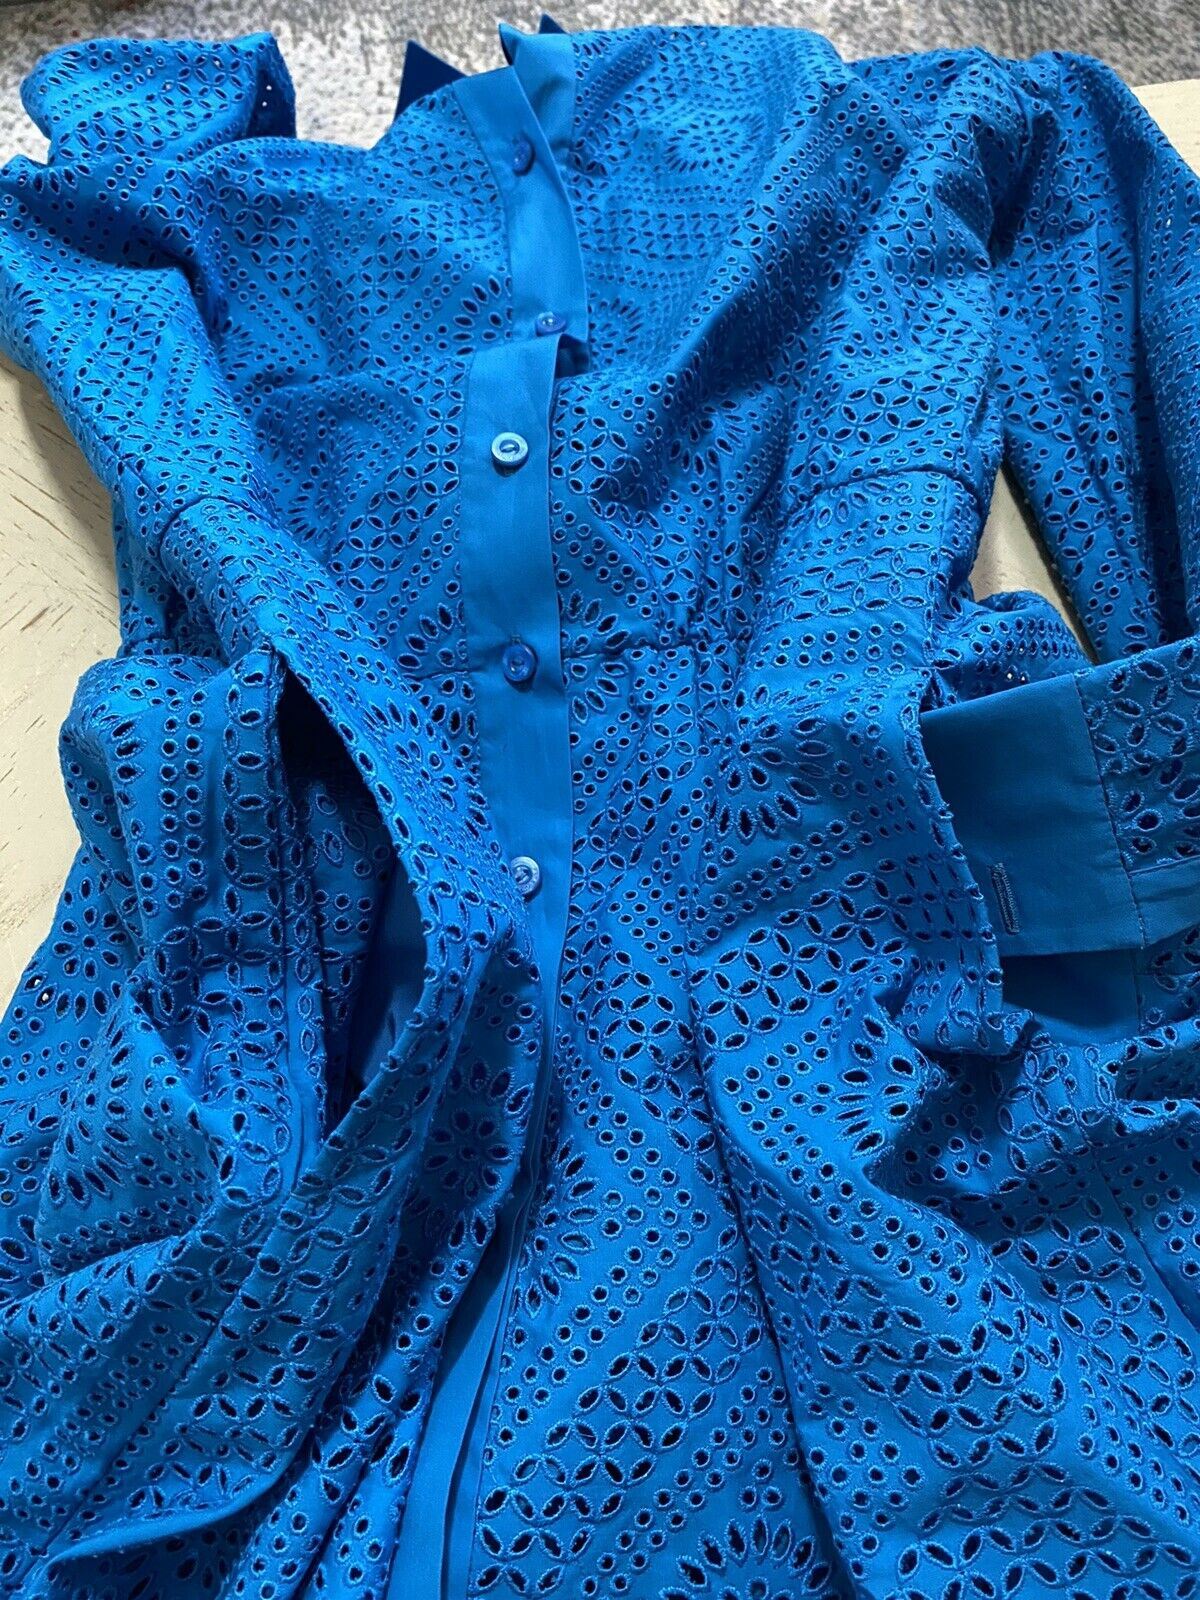 Новое платье-рубашка трапециевидного силуэта с люверсами Loro Piana Lucienne, $3600, синее 46/12, Италия